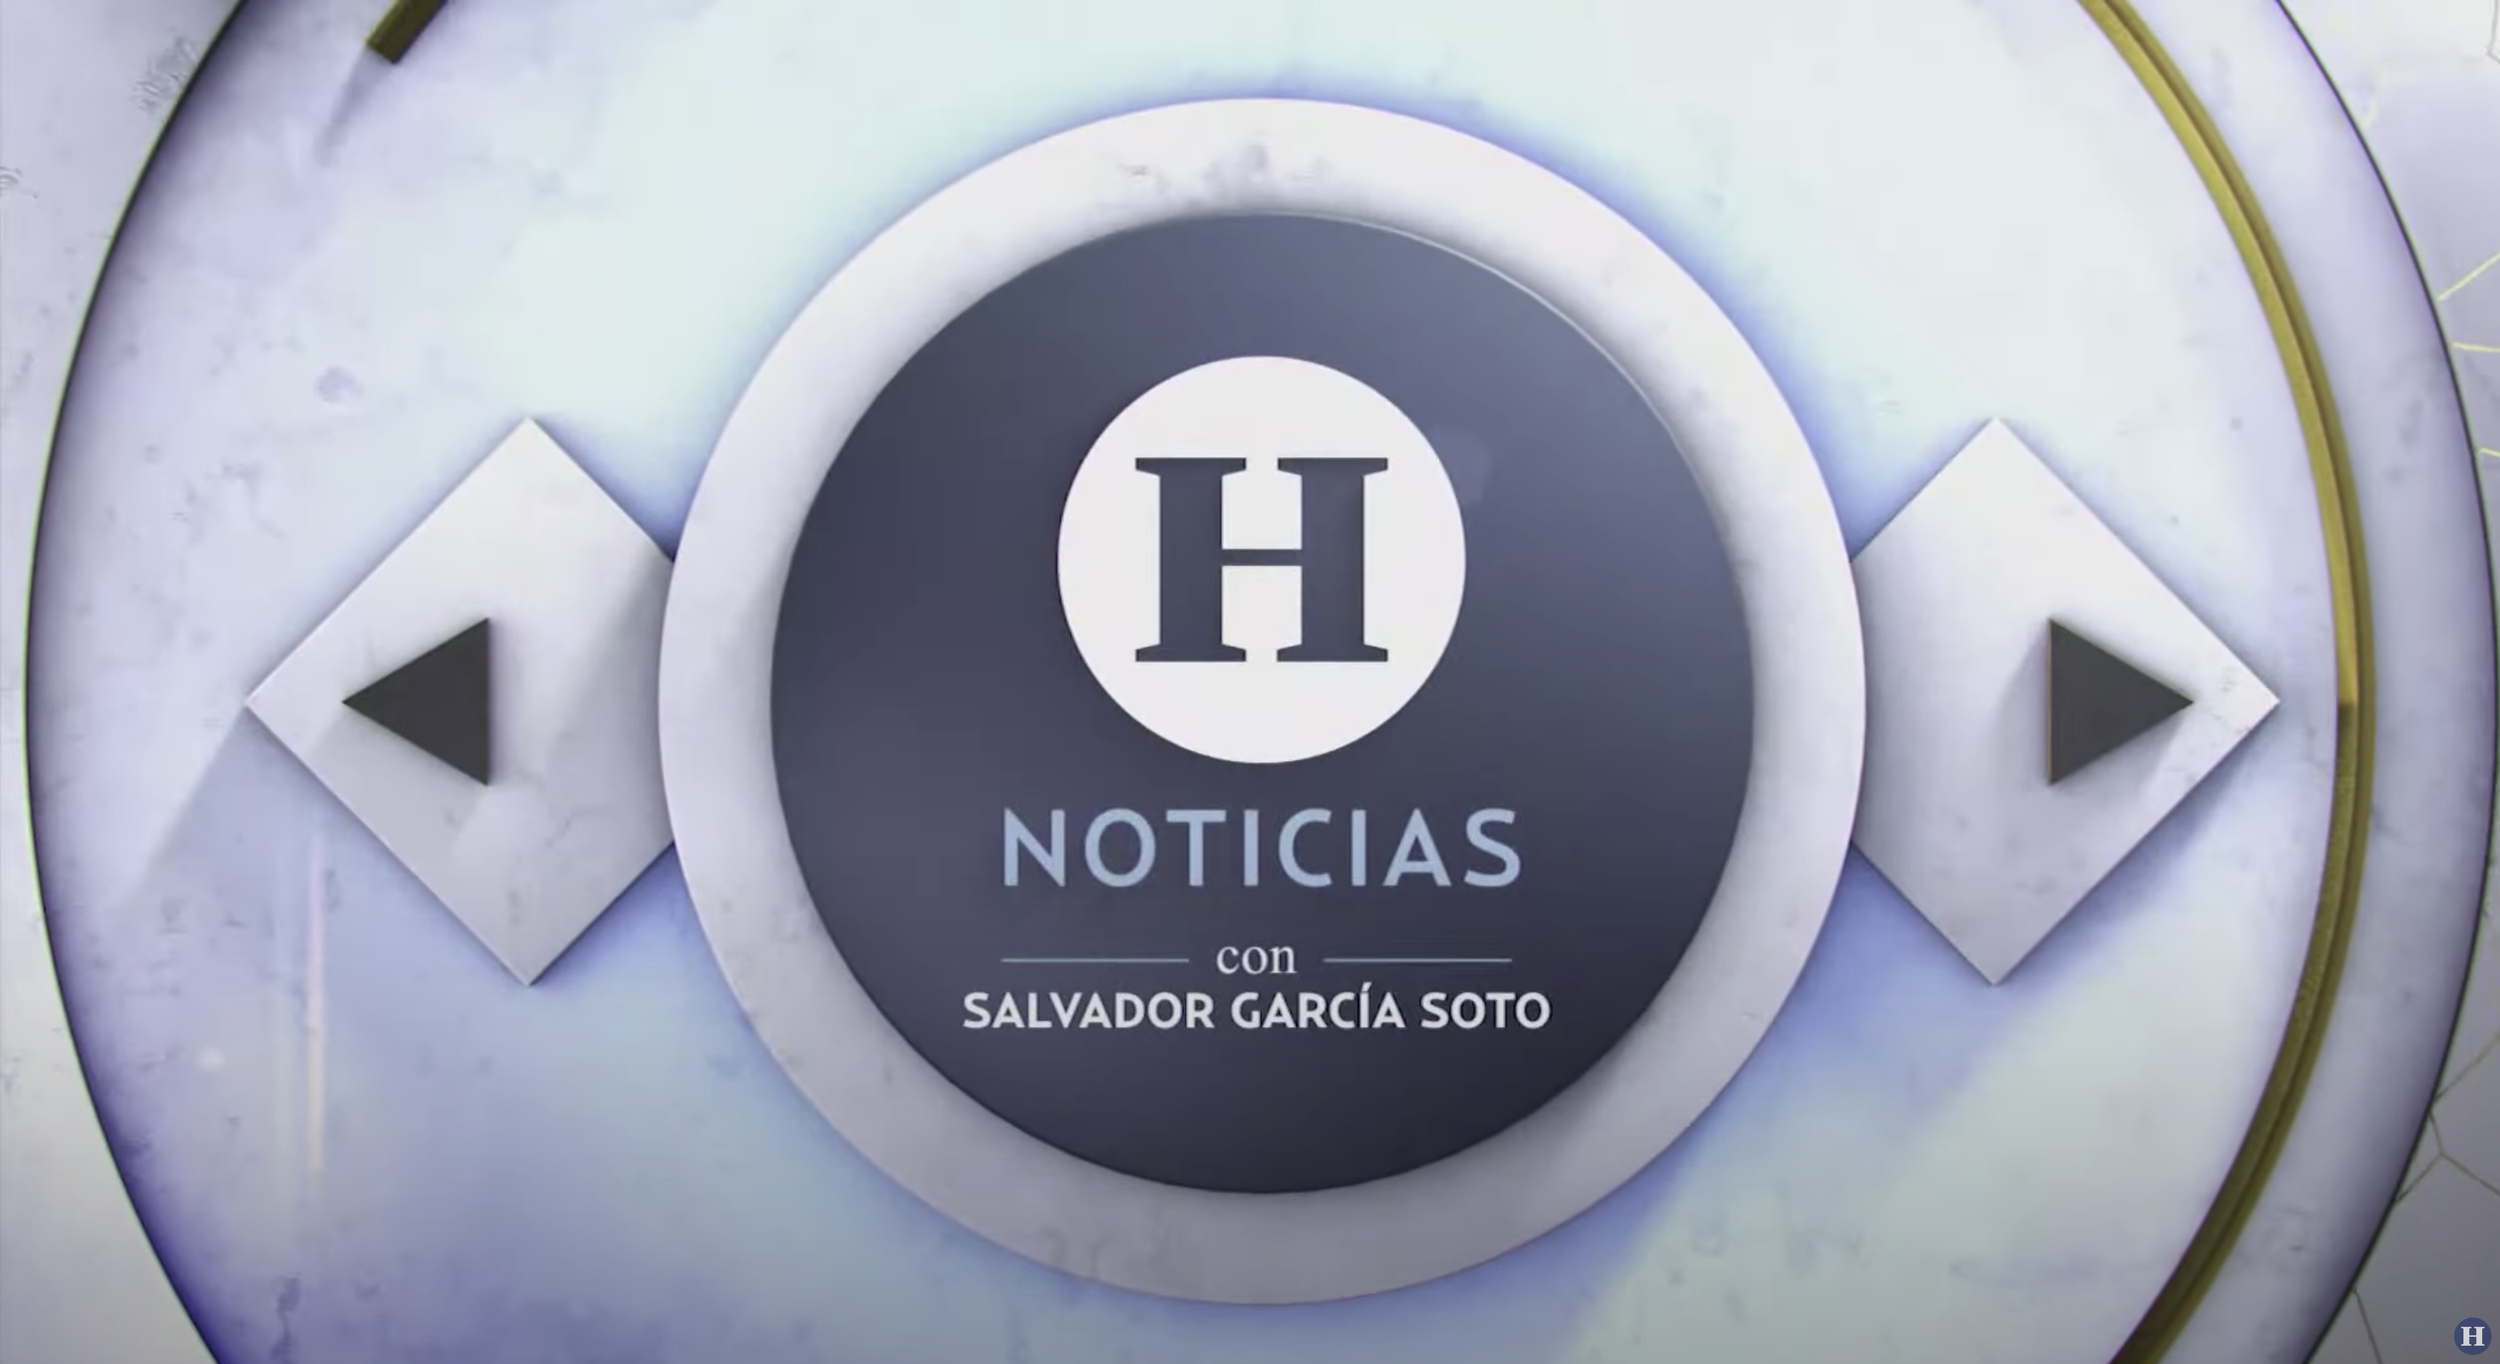 El Heraldo Nightly News - Theme Music